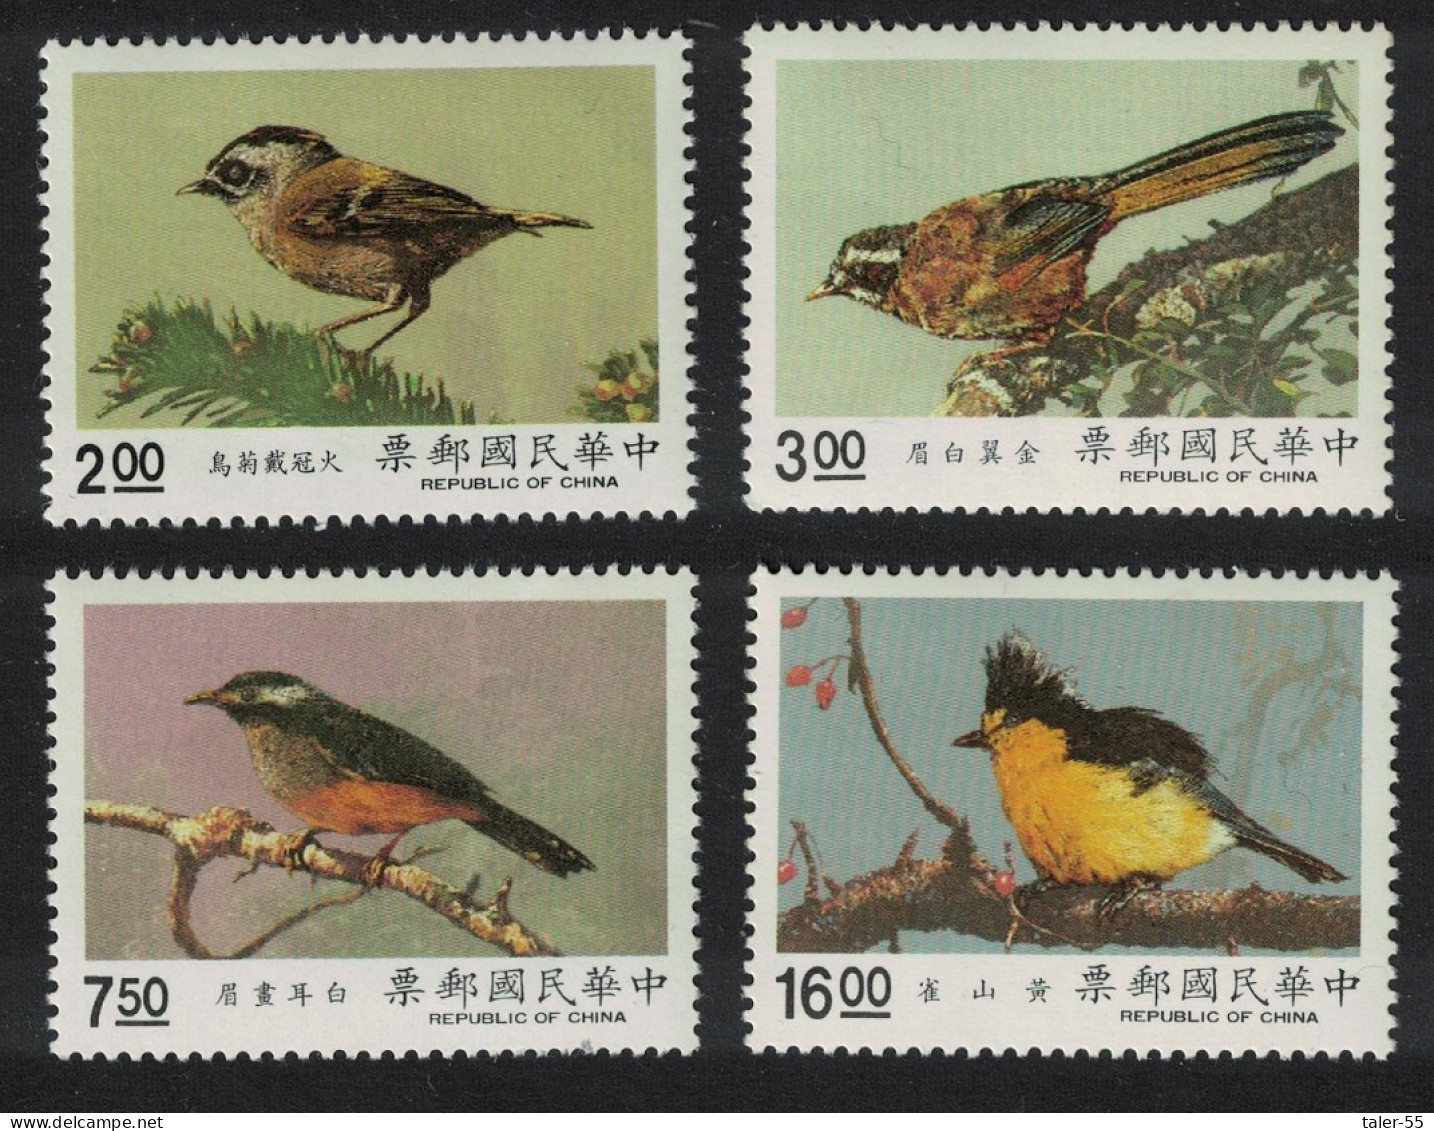 Taiwan Birds 4v 1990 MNH SG#1922-1925 - Ungebraucht